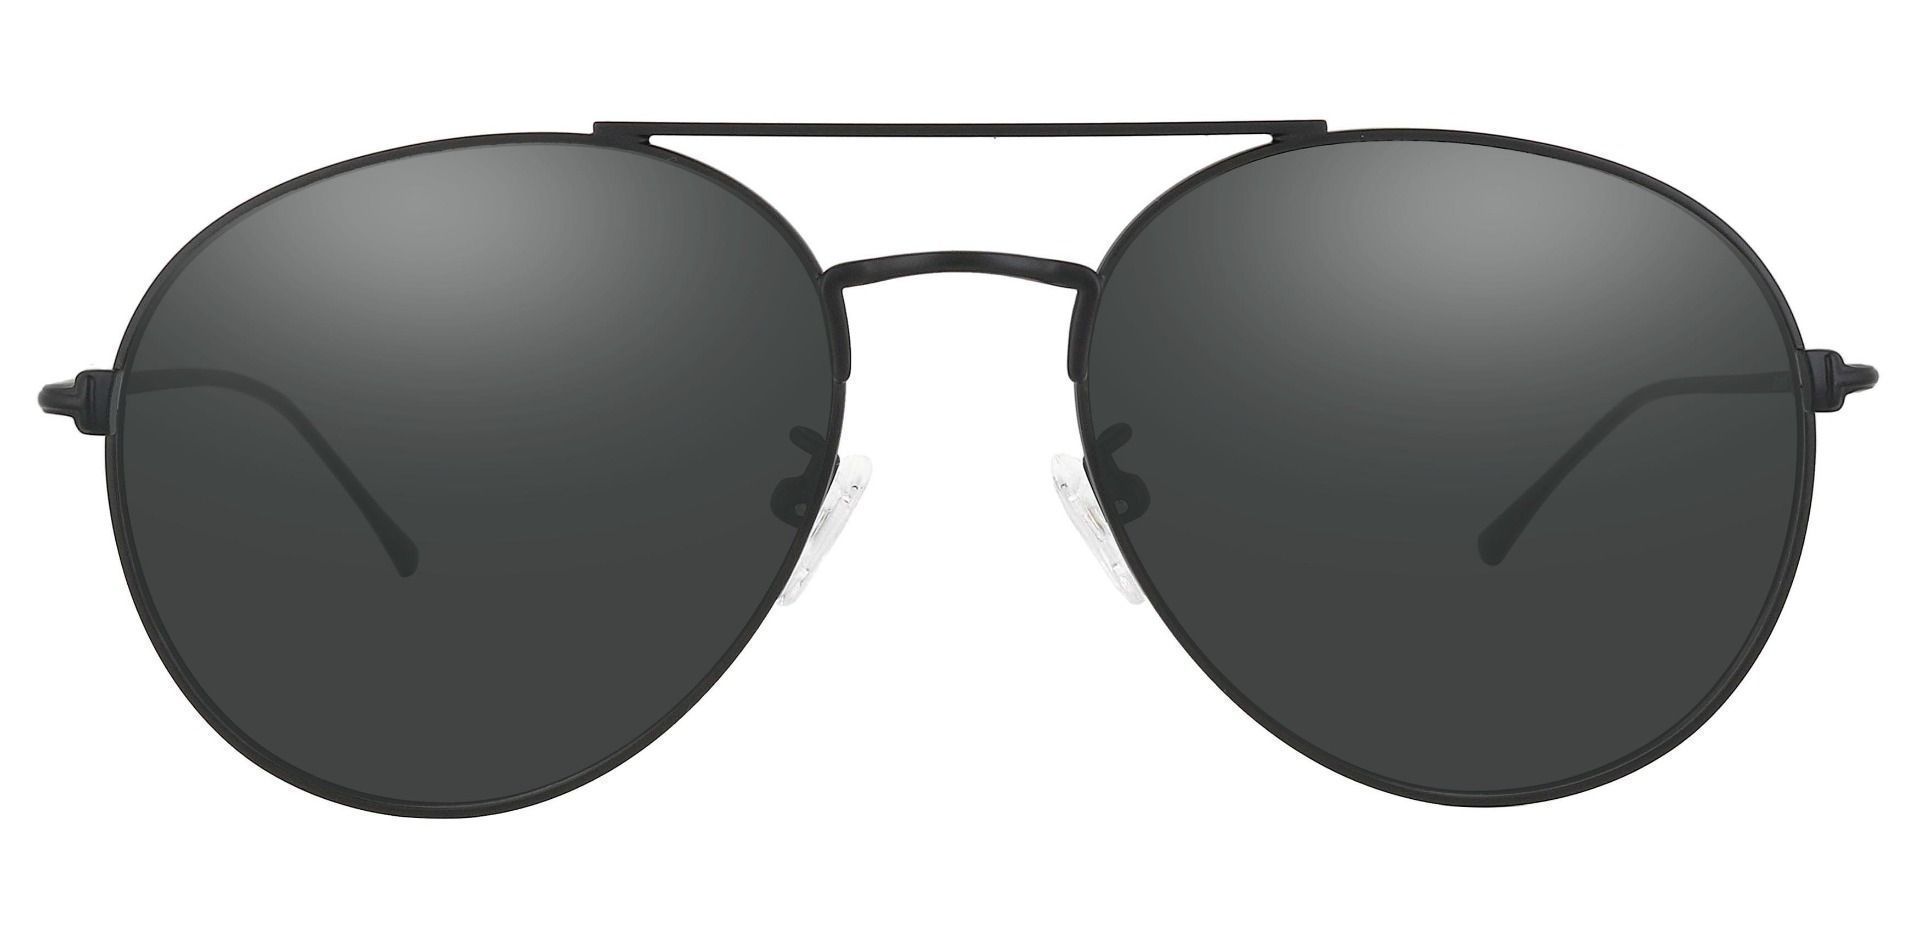 Canon Aviator Single Vision Sunglasses - Black Frame With Gray Lenses ...